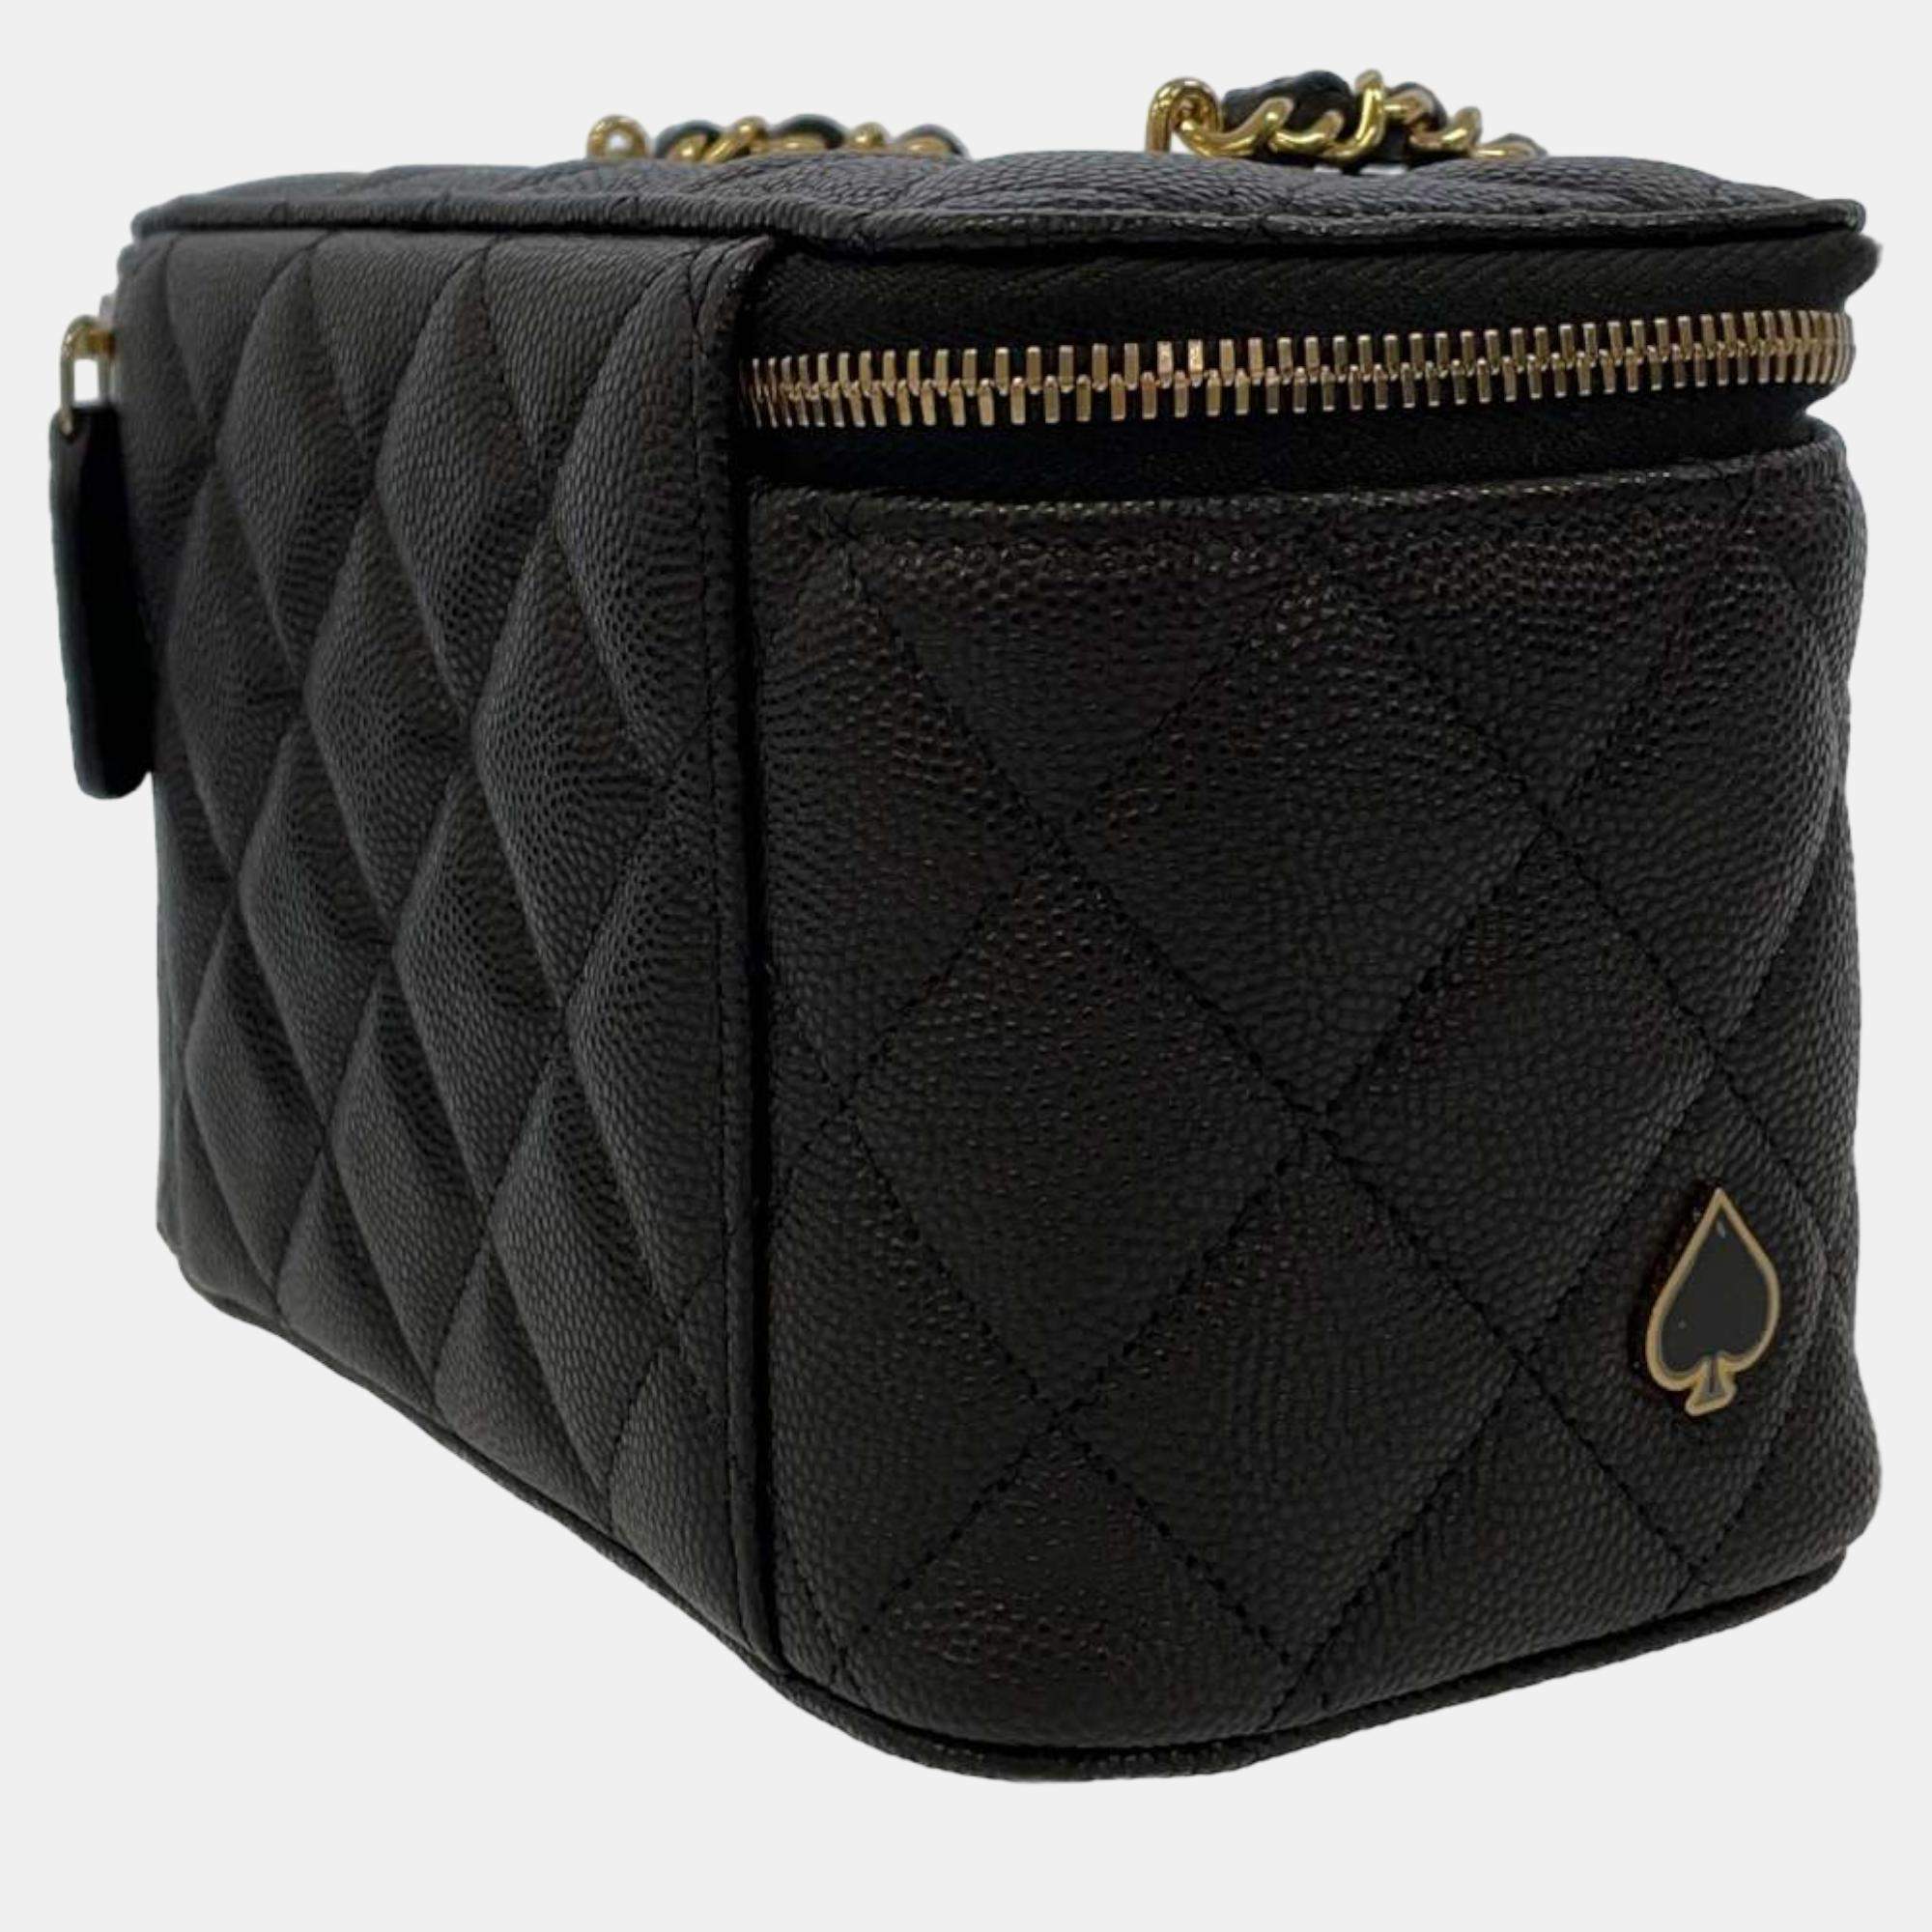 Chanel Black Leather CC Vanity Case Chanel